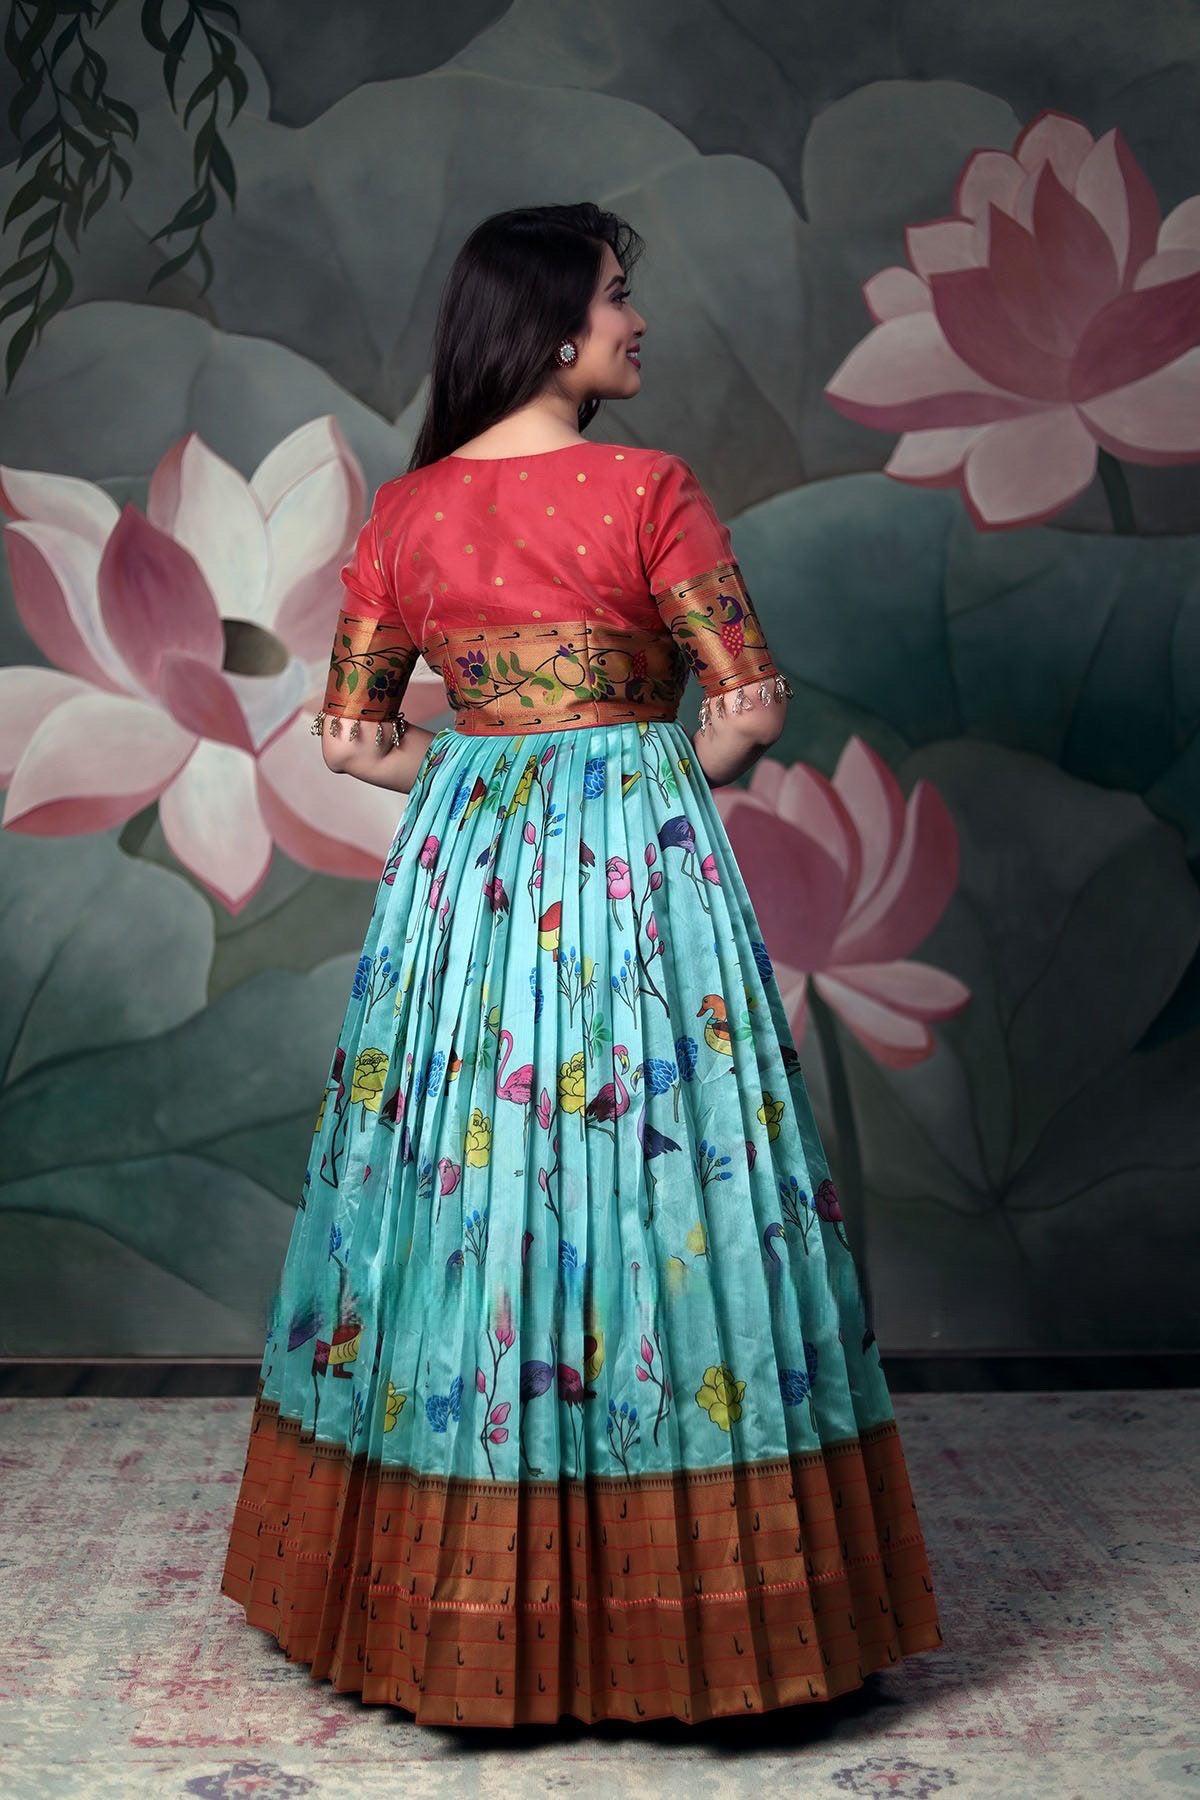 Pethani Kalamkari Banarsi Dress with Pethani Peacock Motif Zari Jacket, featuring glass bead lace and hand embroidery